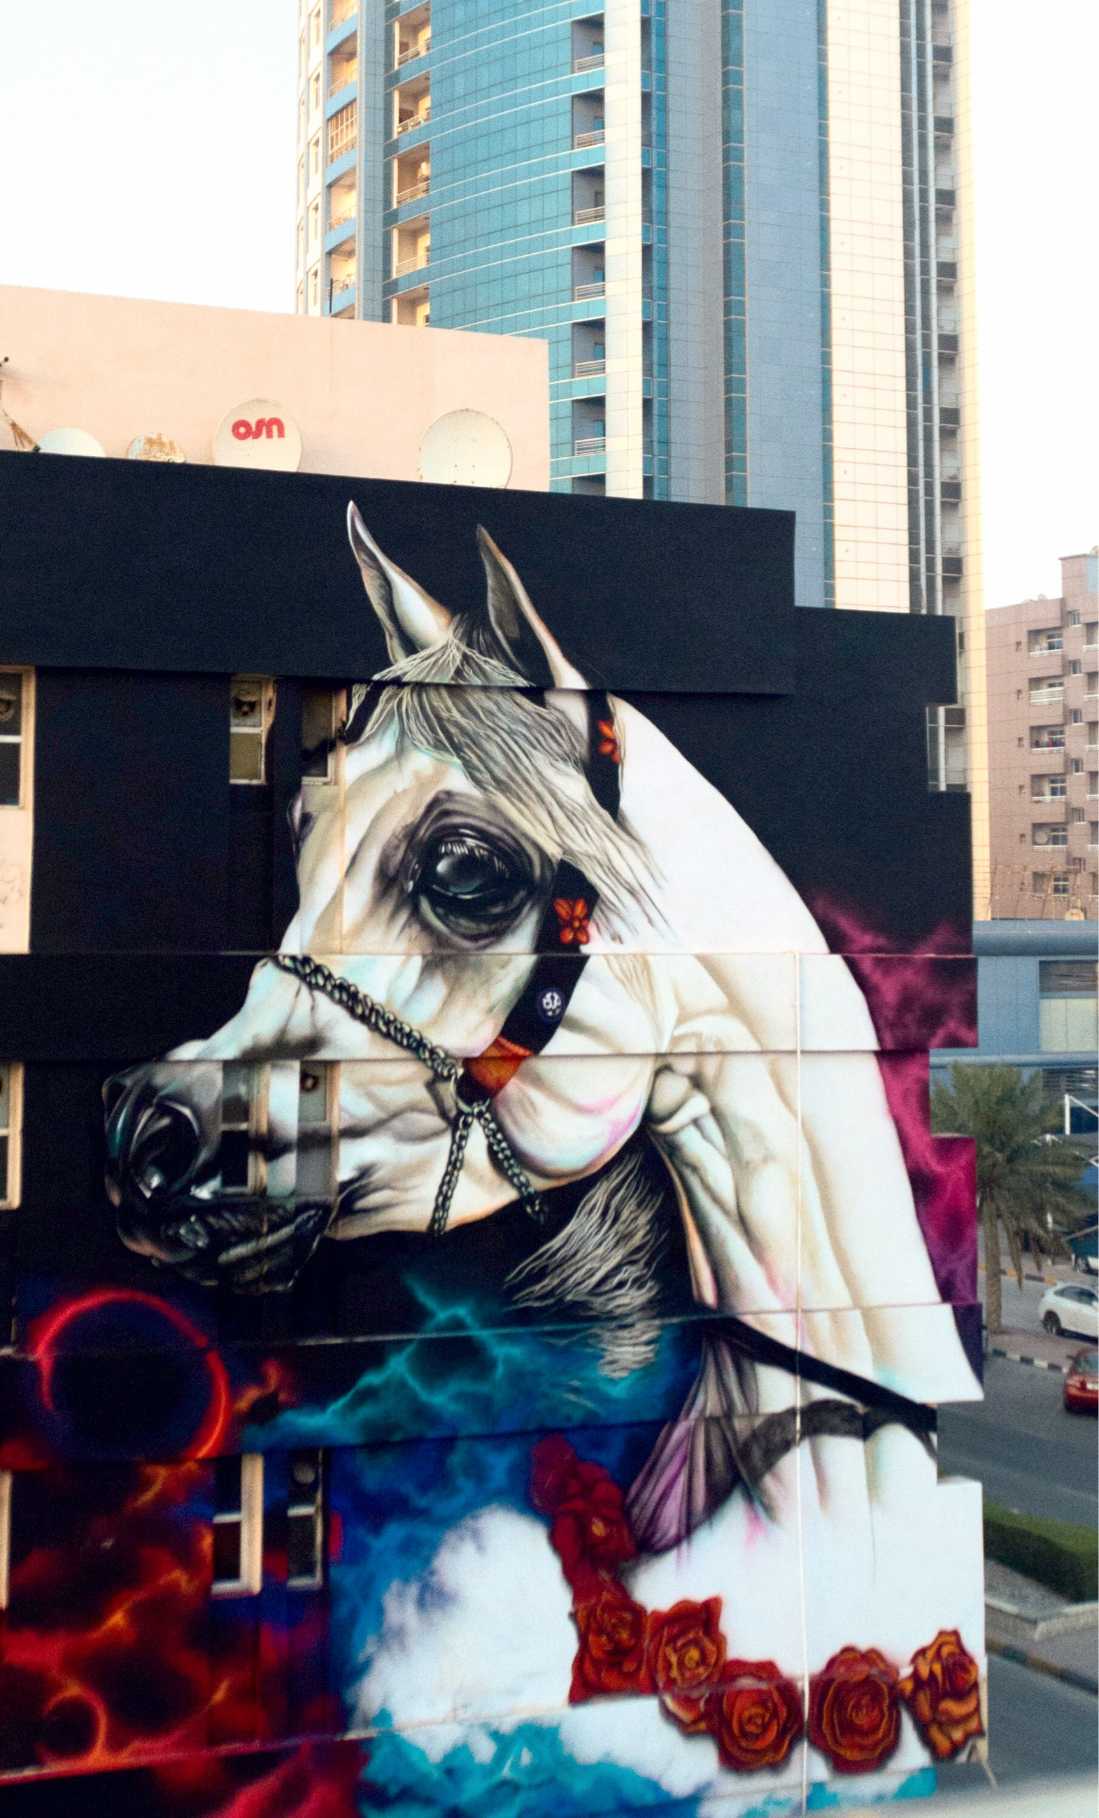 White horse Outdoor - Graffiti wall art